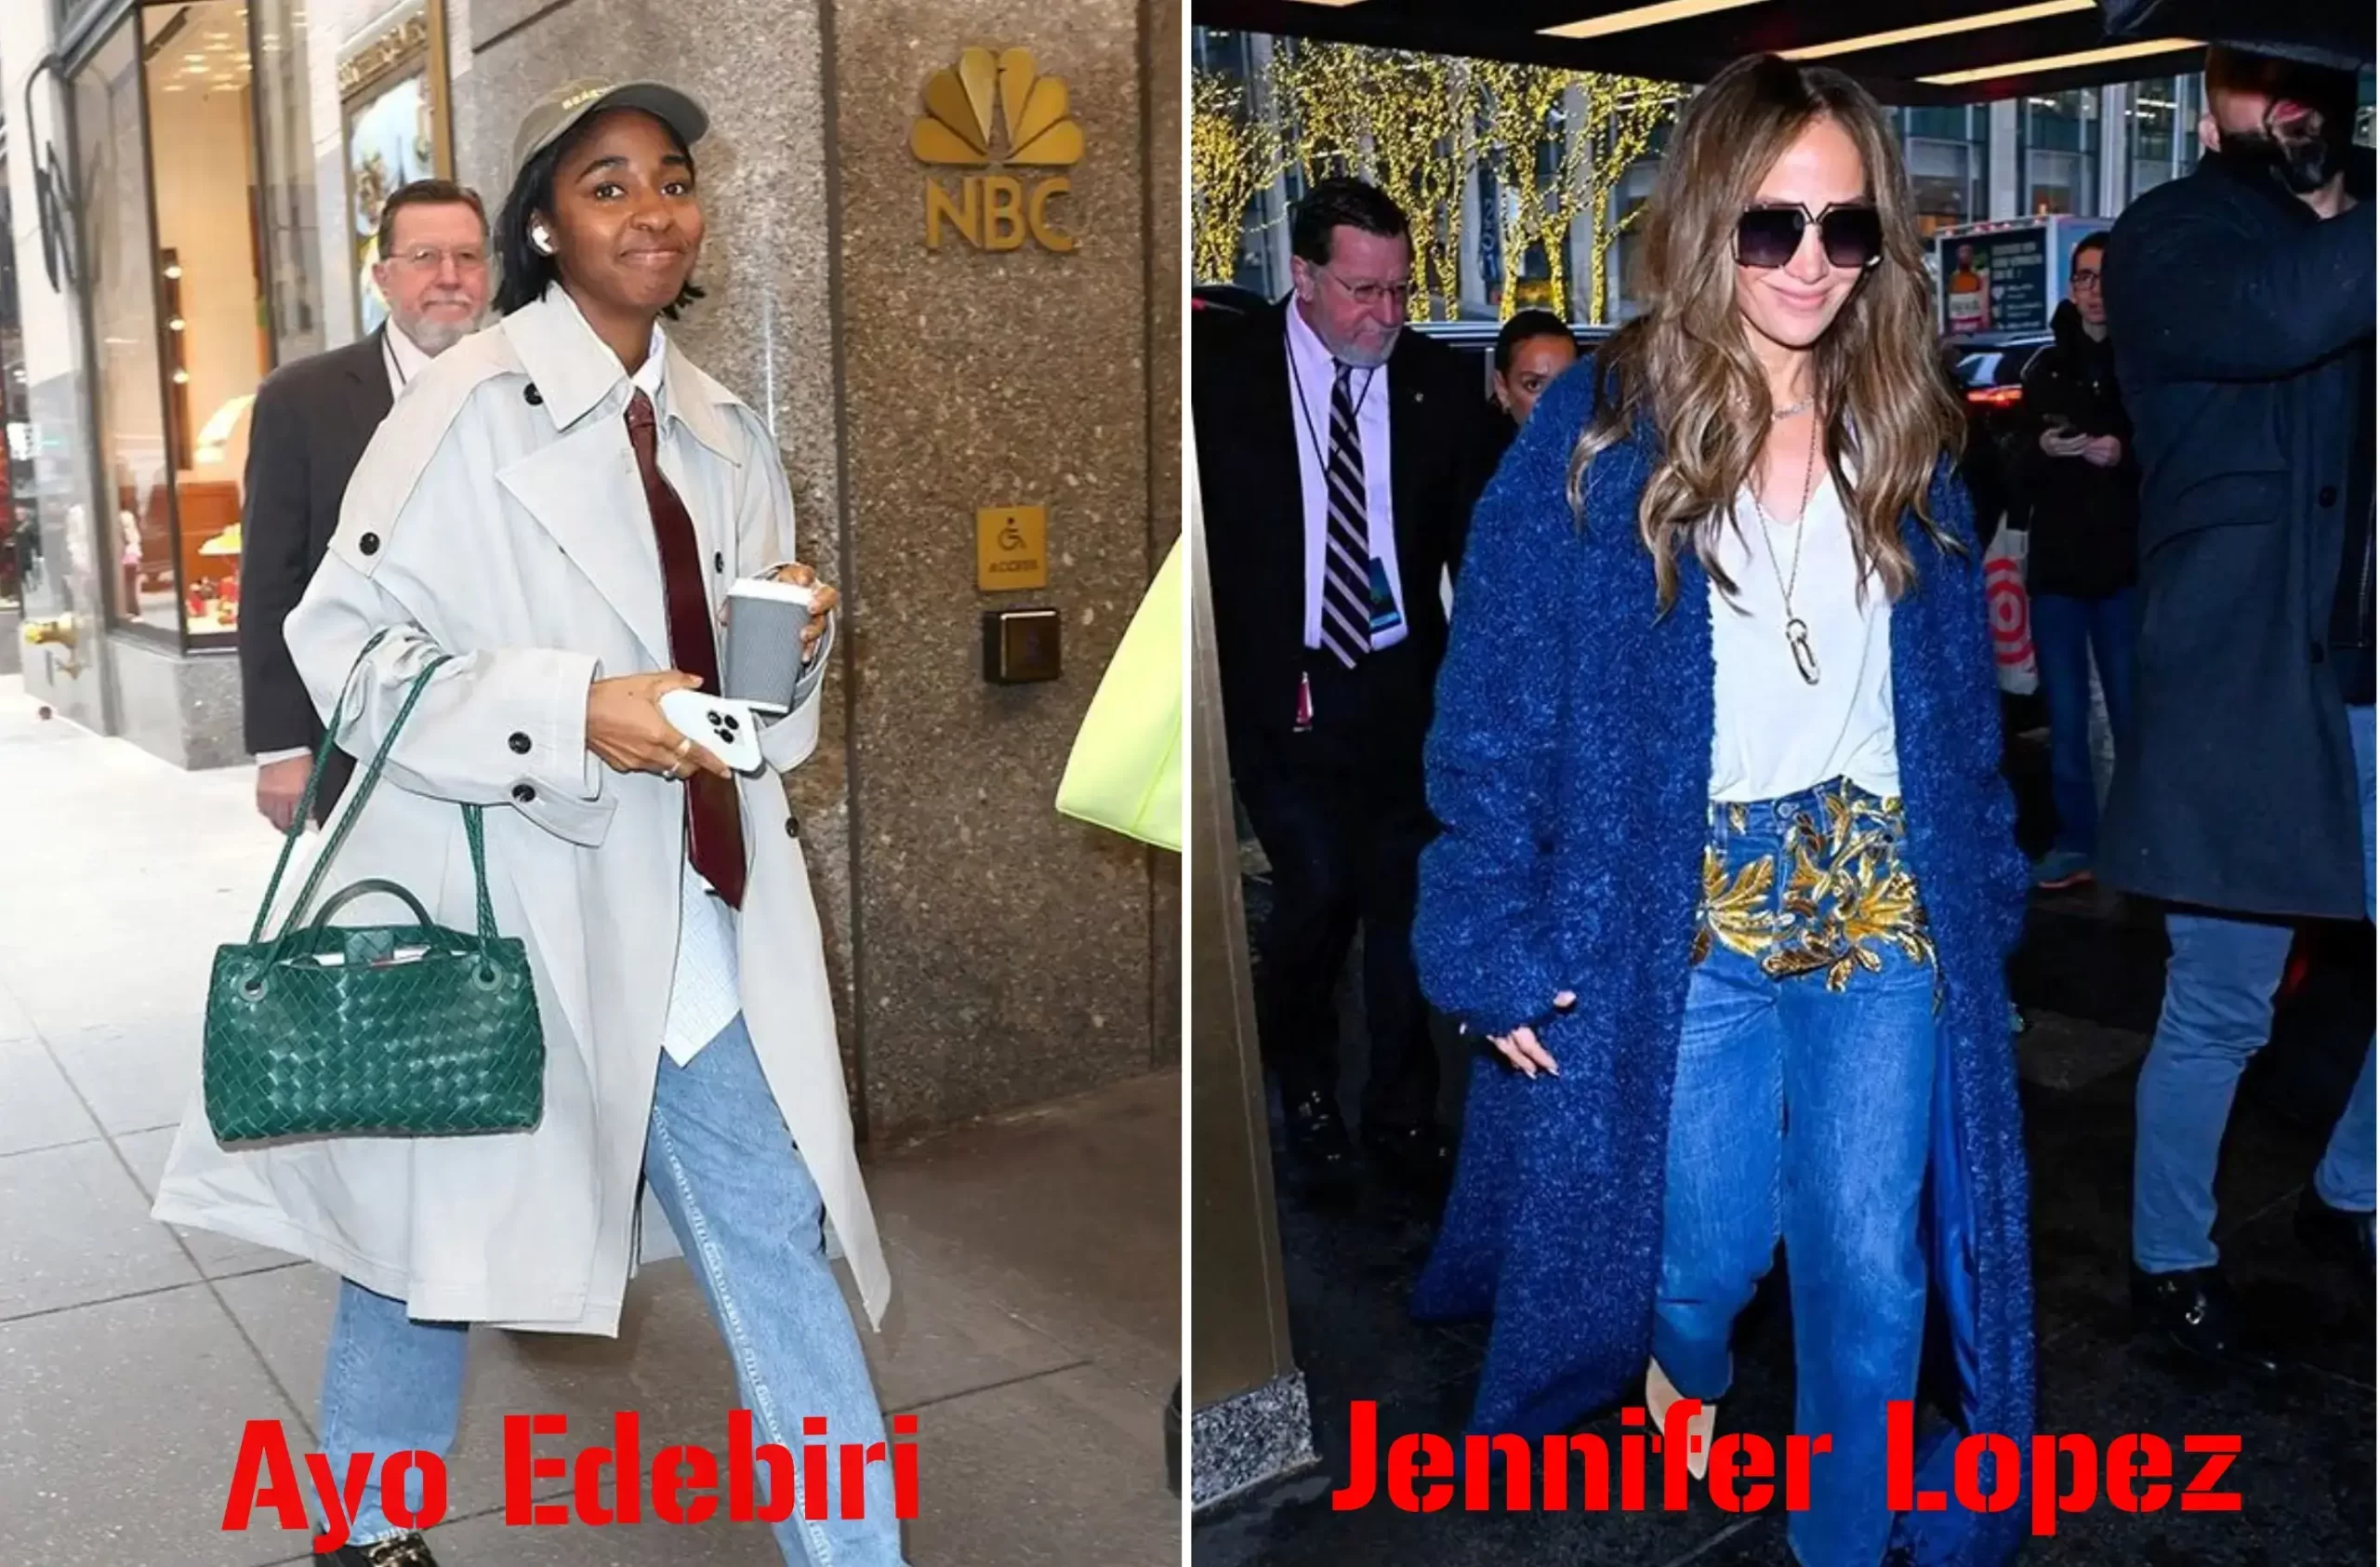 Jennifer Lopez And Ayo Edebiri Arrives For Snl